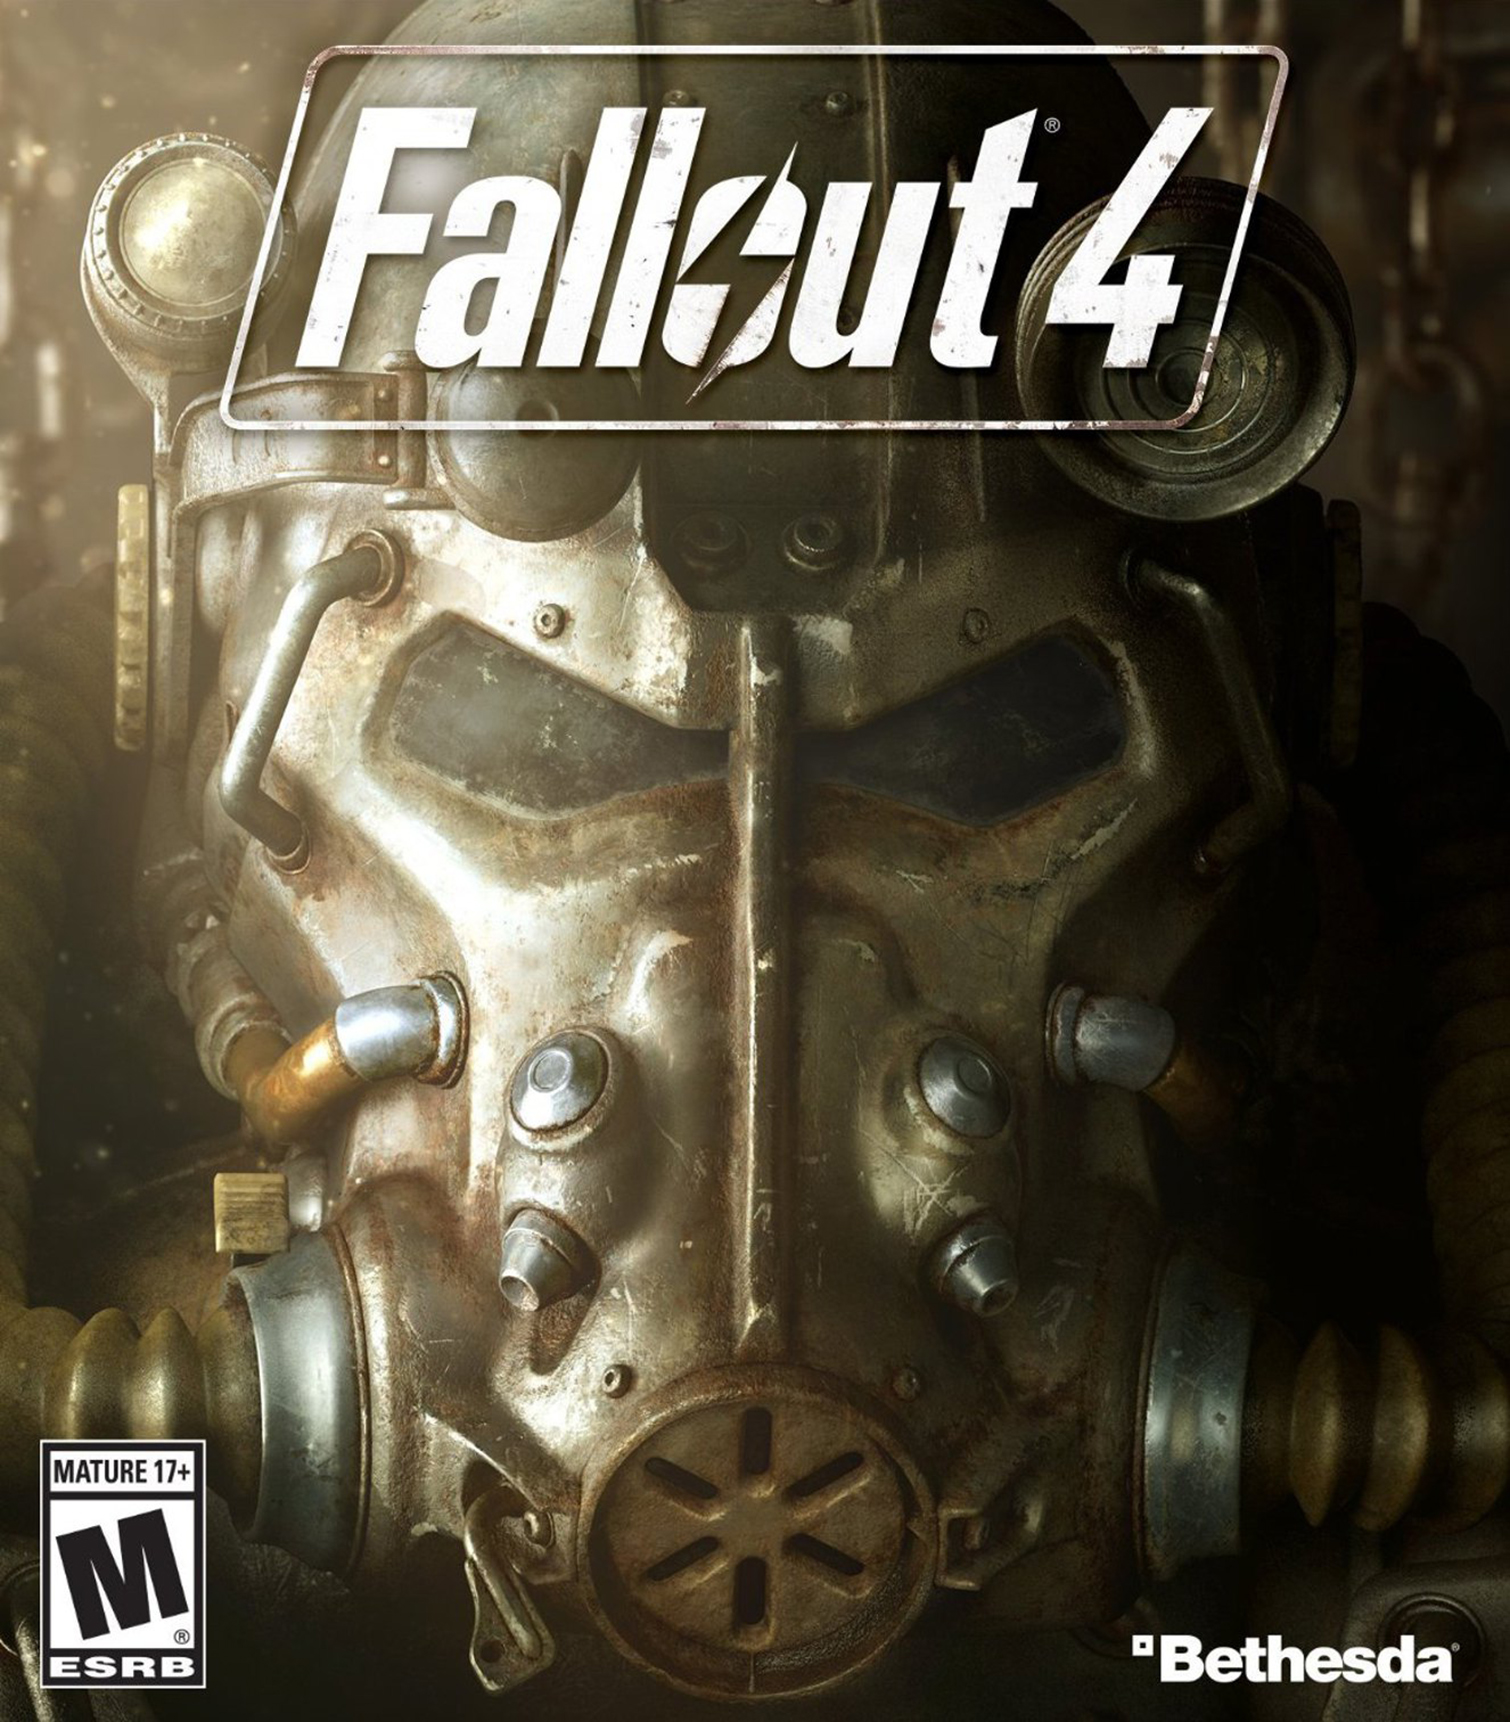 Okładka gry 'Fallout 4'